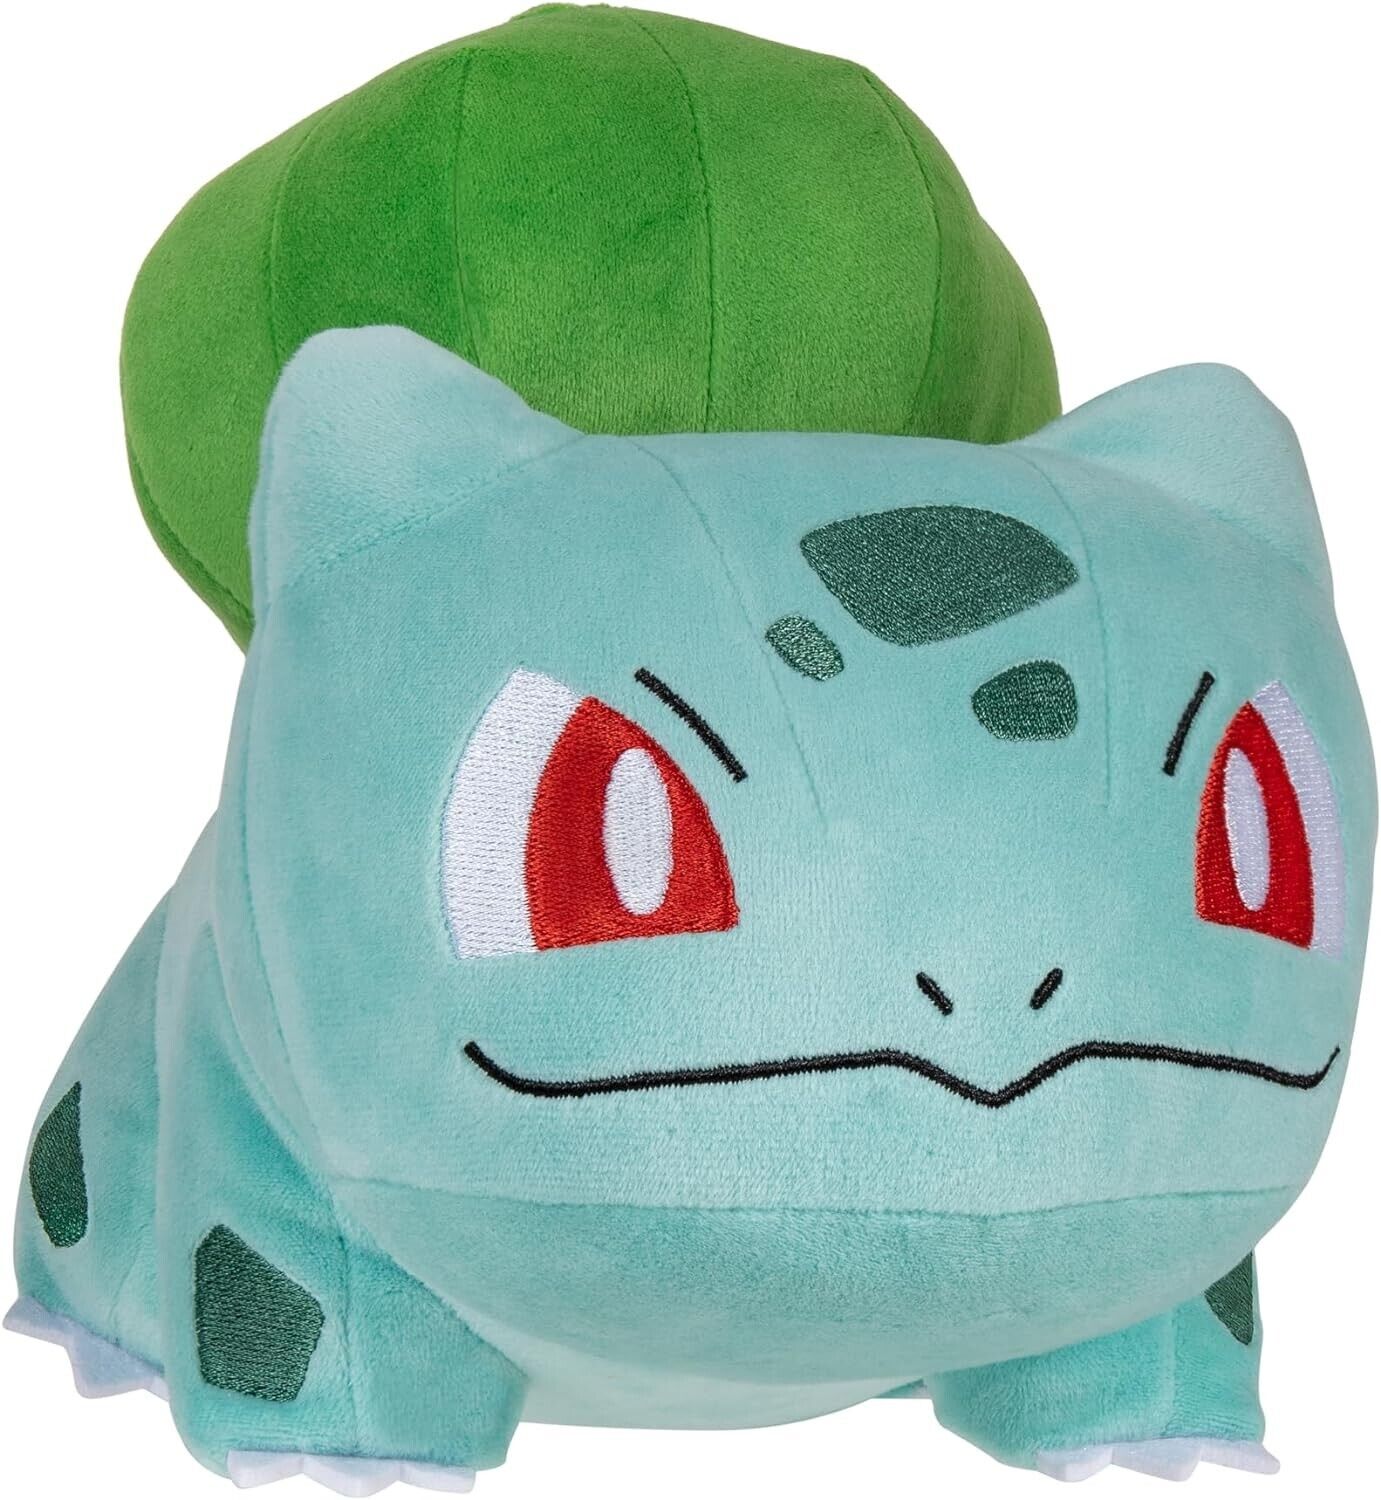 Pokémon PKW3112 Official & Premium Quality 12-inch Bulbasaur Adorable,Ultra-Soft